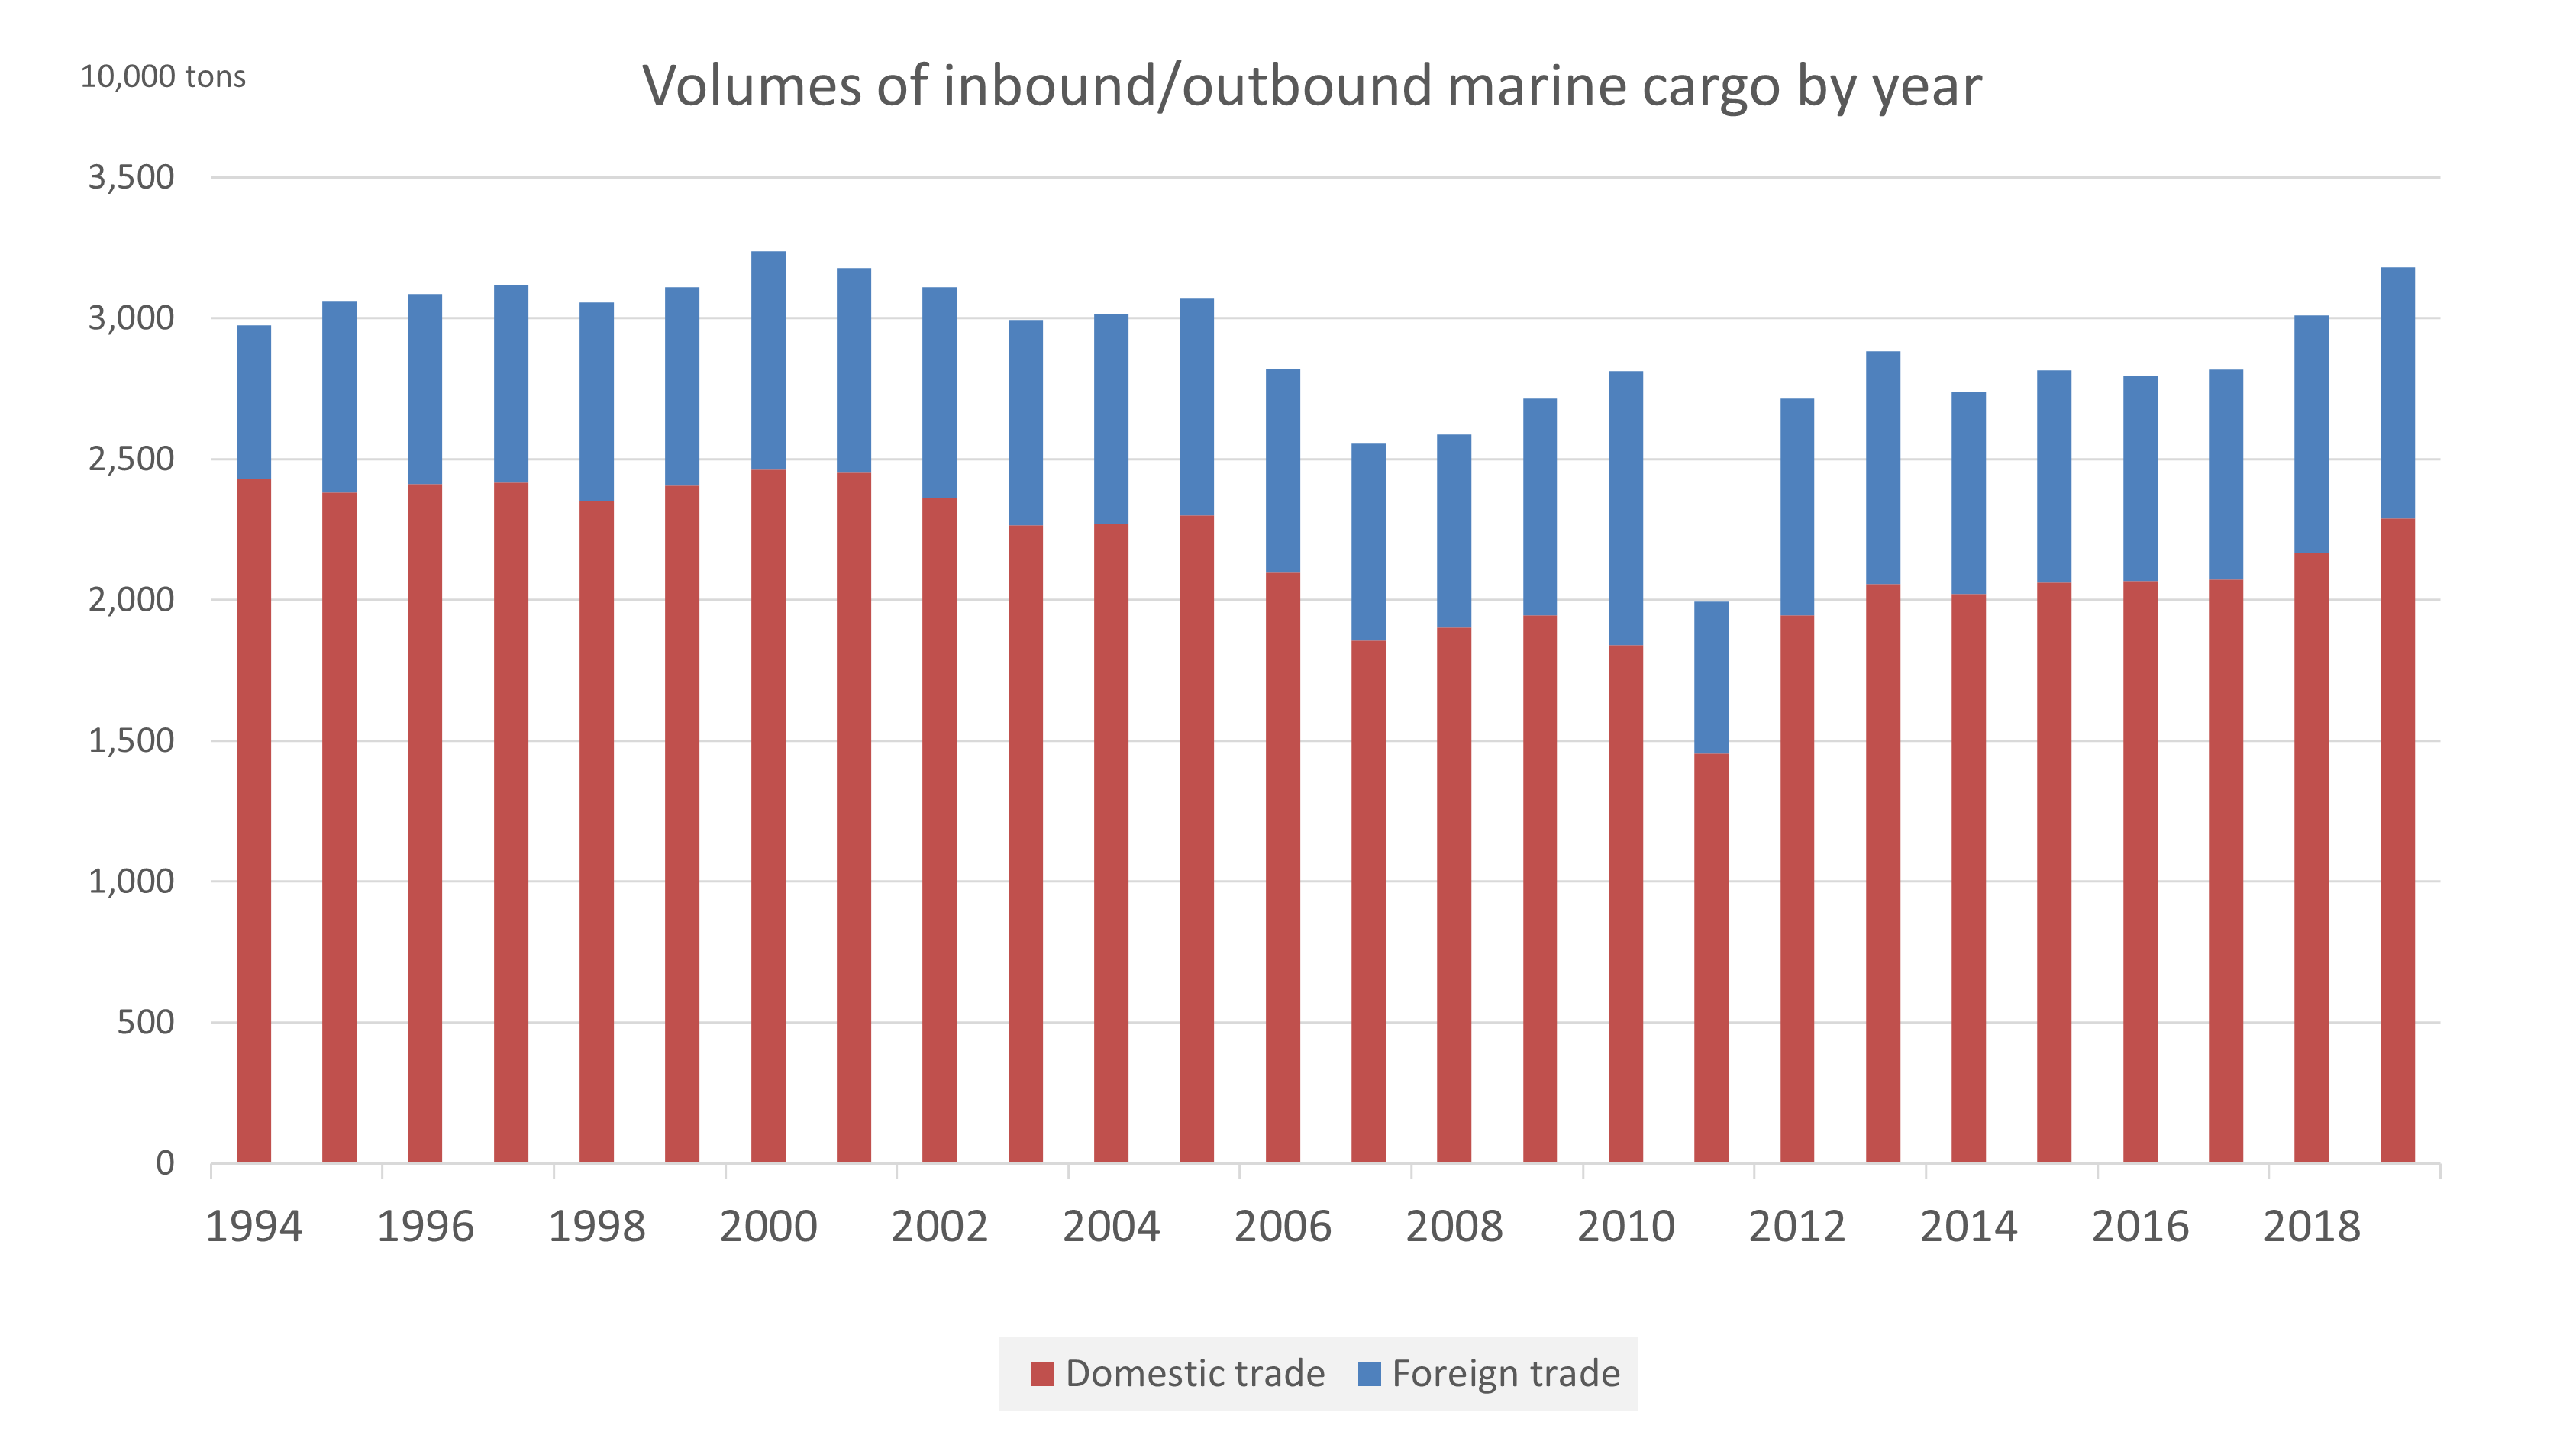 Annual inbound and outbound marine cargo (2019)Source: 